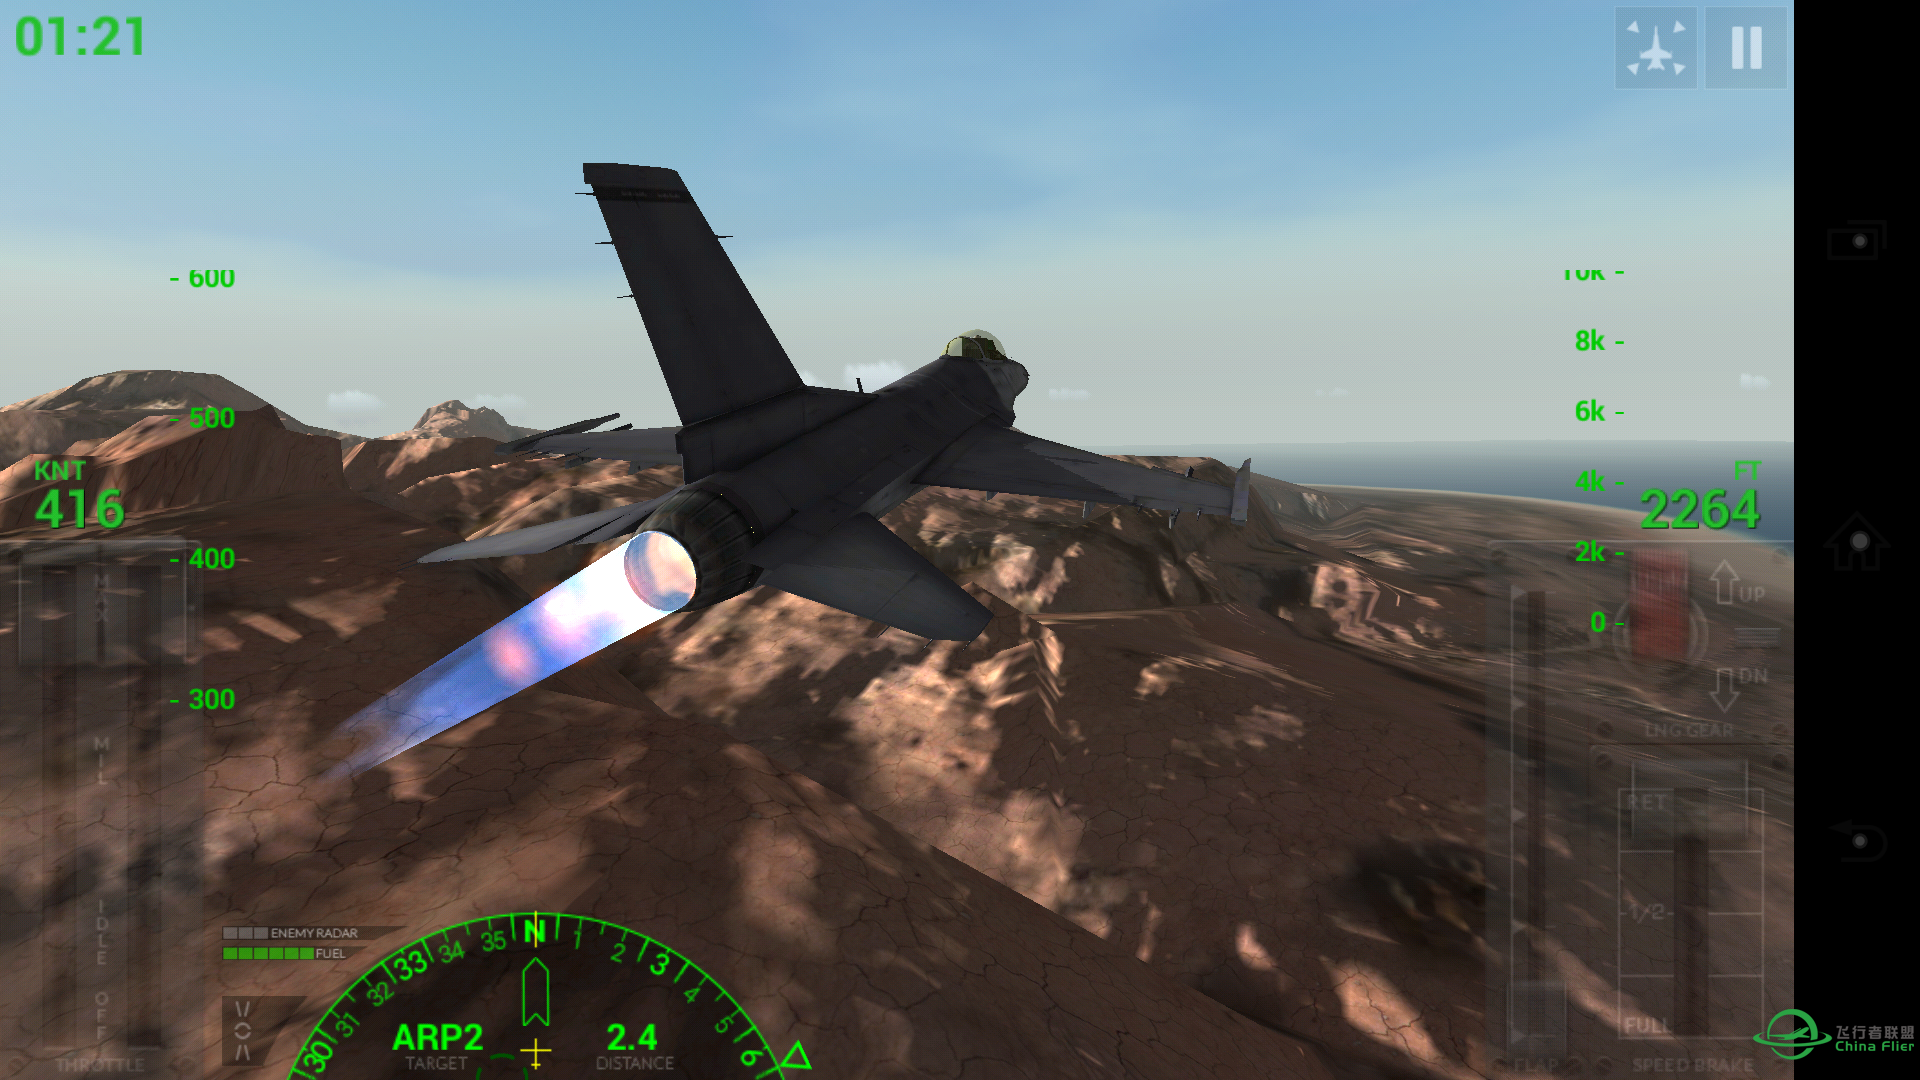 [截图而已]F18 Carrier Landing2 Pro-3942 